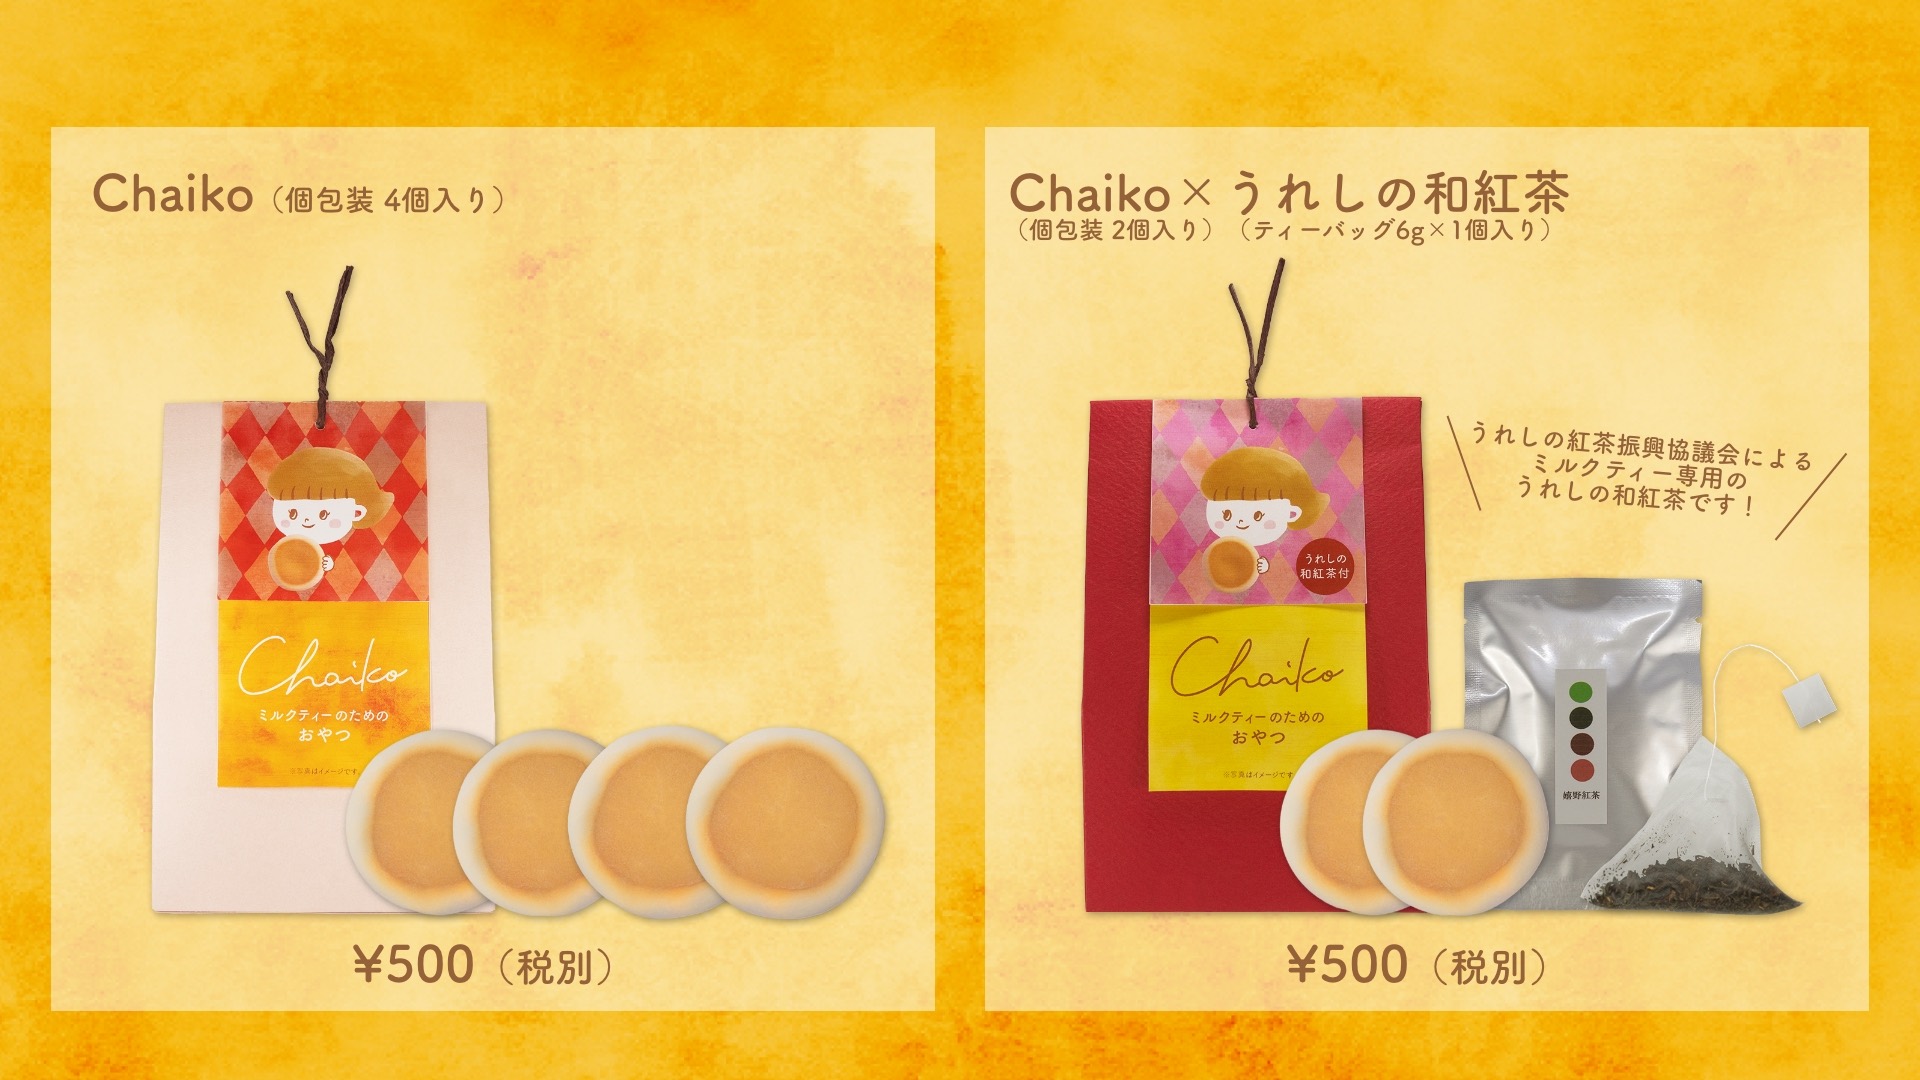 Chaikoチャイコ。ミルクティーのためのおやつ。佐賀県の郷土菓子を製造する源八屋による新しい佐賀のおやつ。